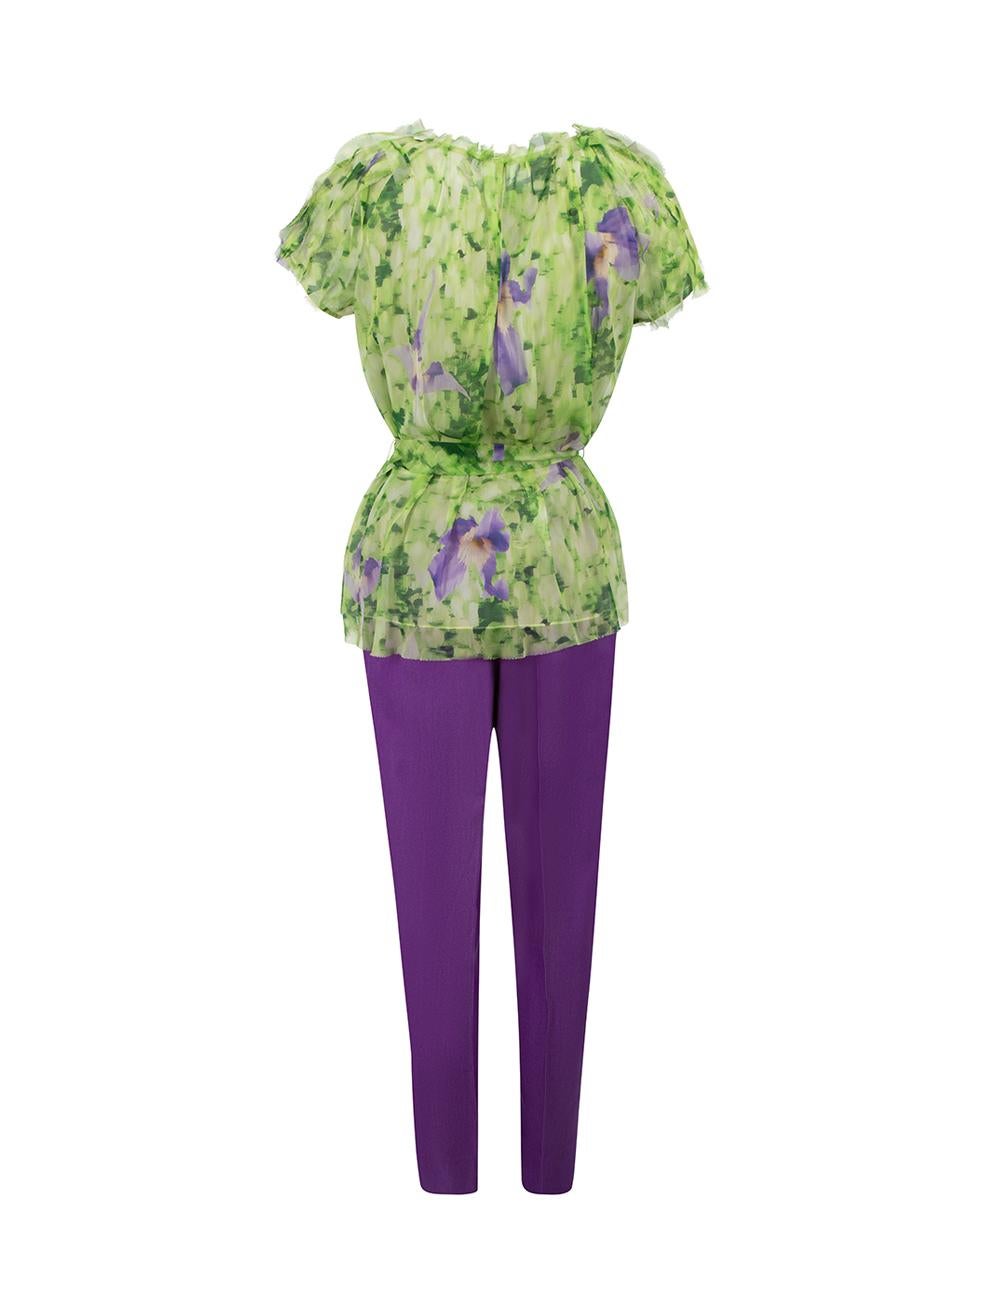 Gray Oscar de la Renta Green & Purple Silk Abstract Print Top & Trousers Set Size L